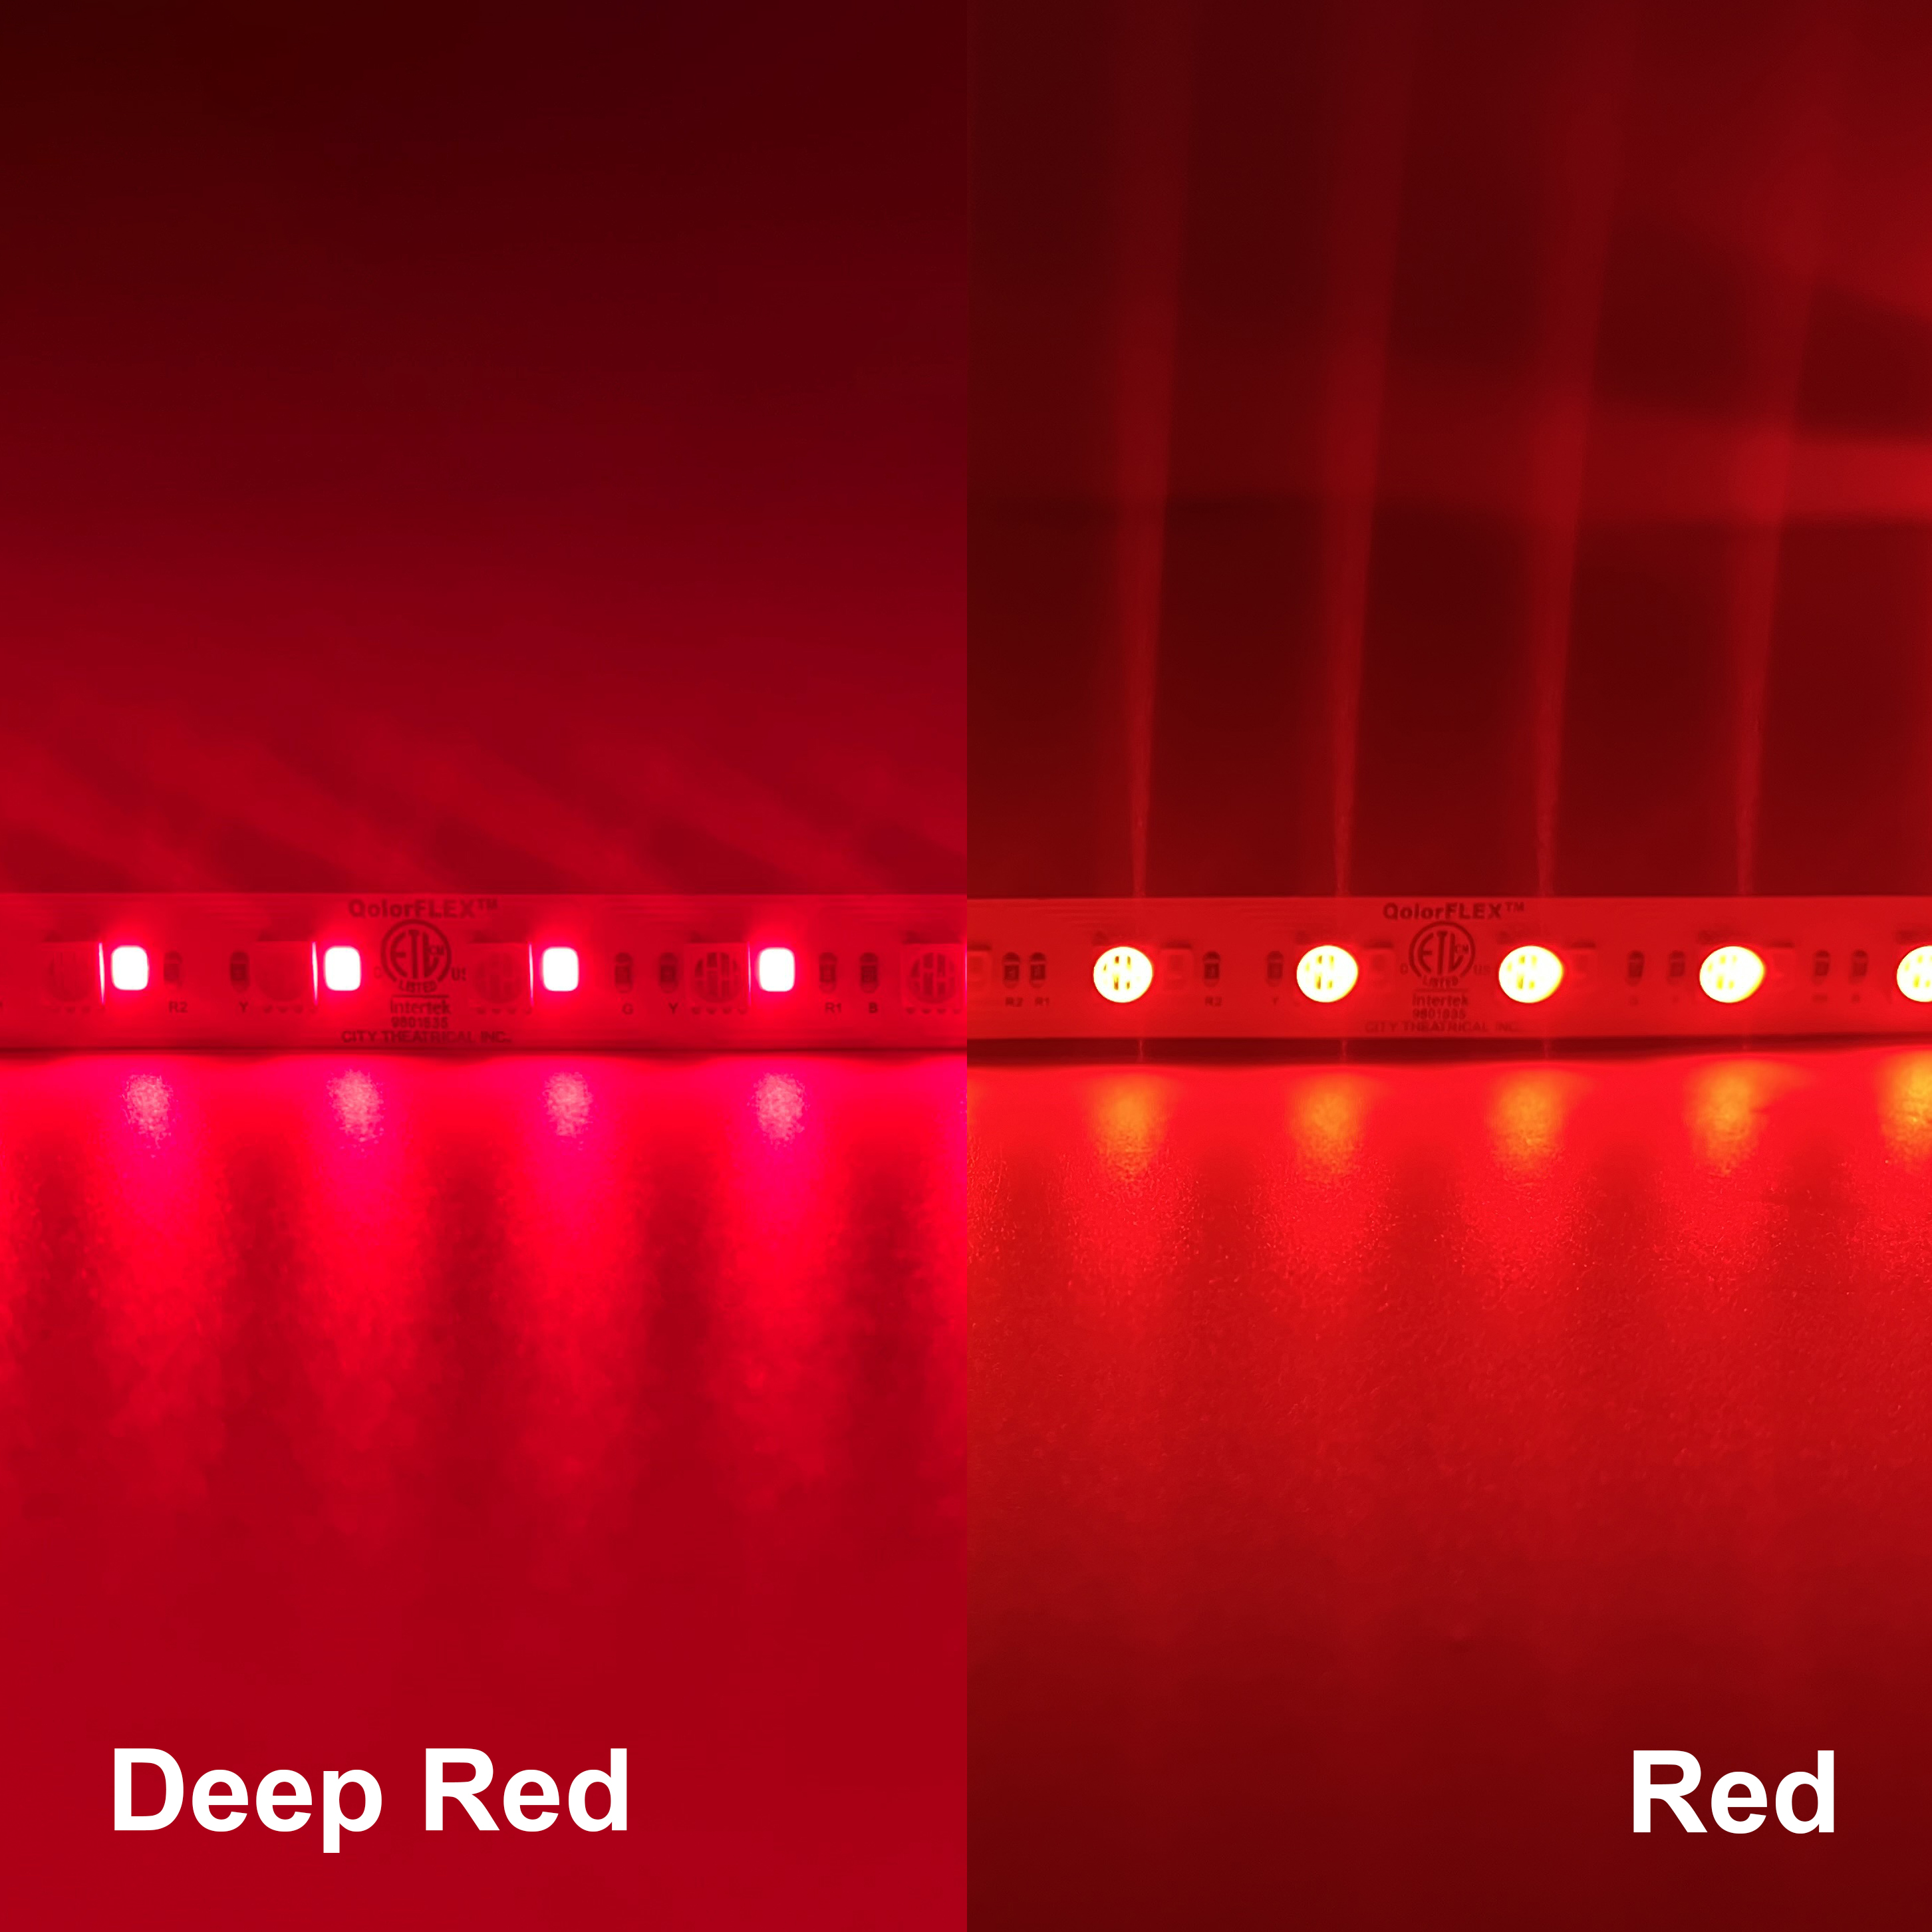 Quad Chip RGBA Plus Deep Red - deep red vs red square